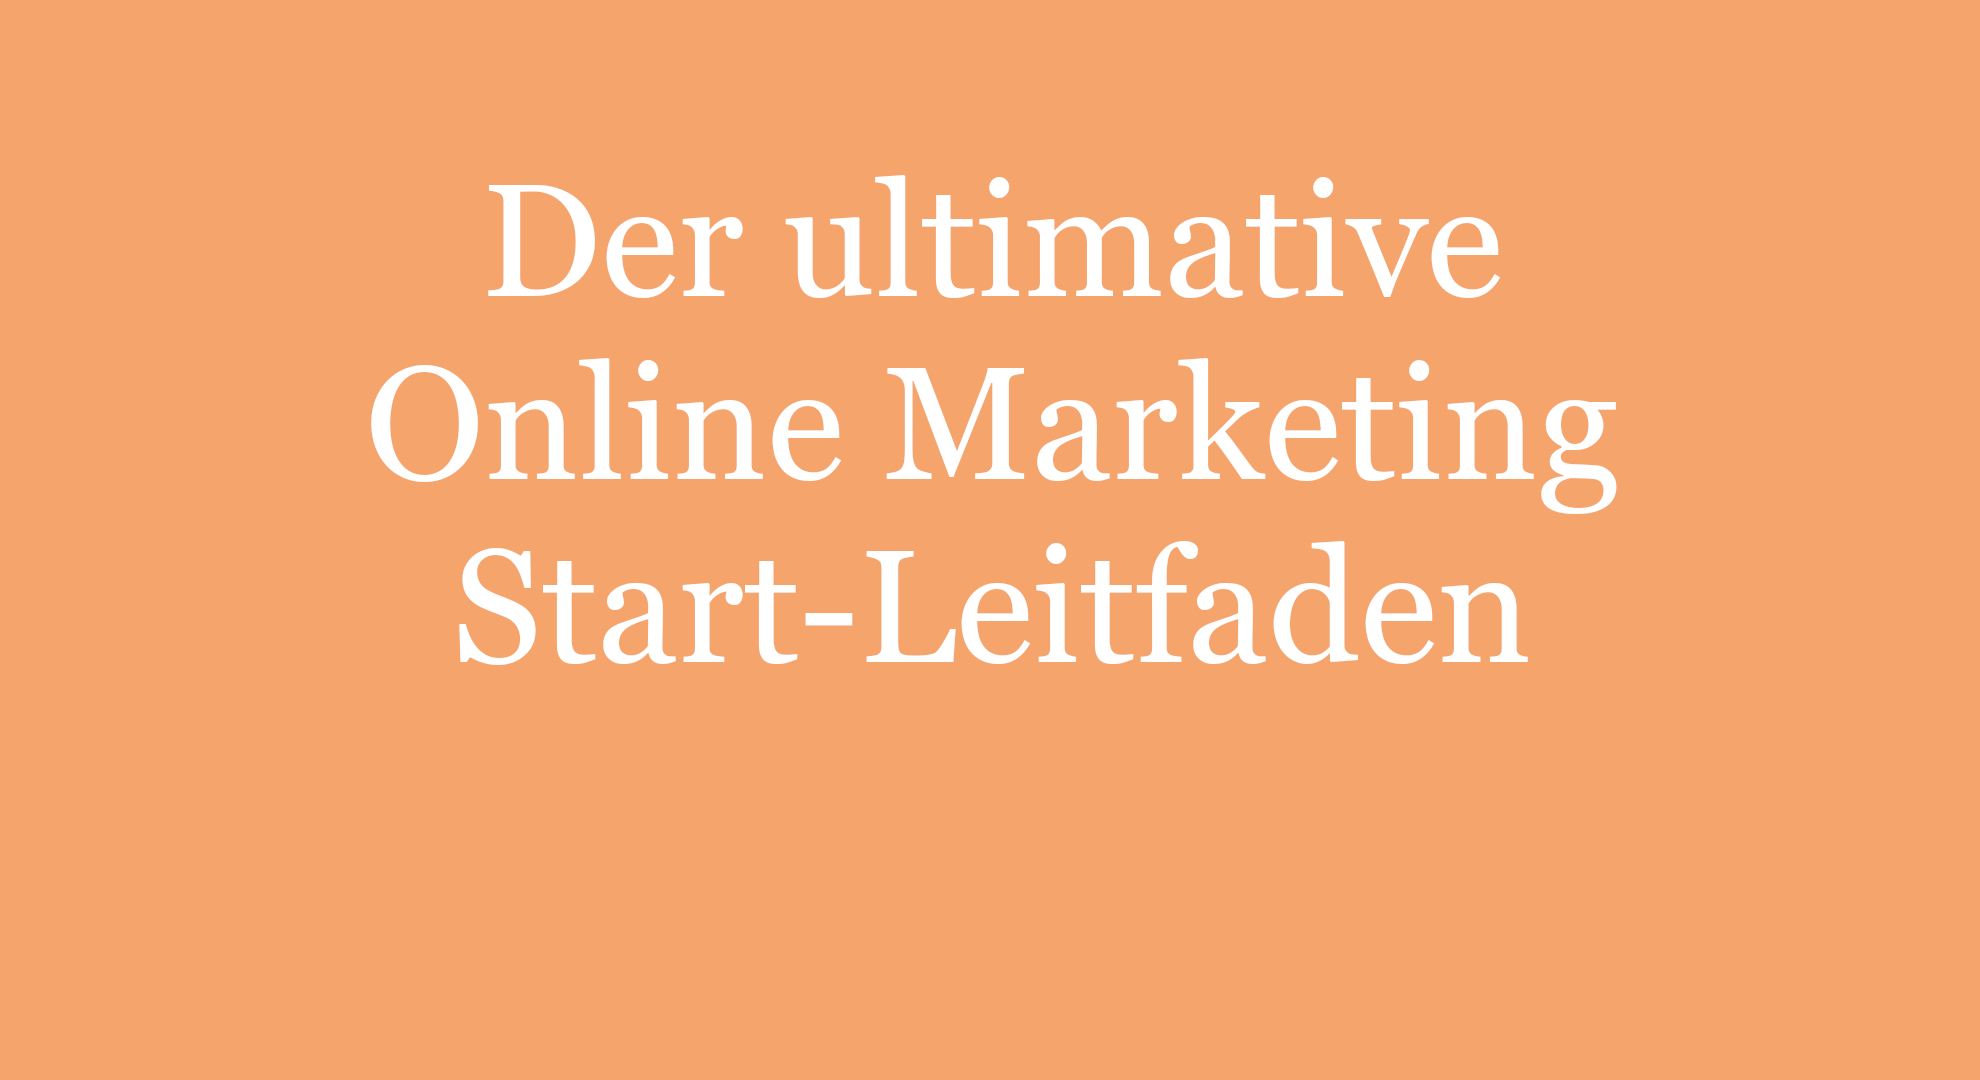 Der ultimative Online Marketing Start-Leitfaden